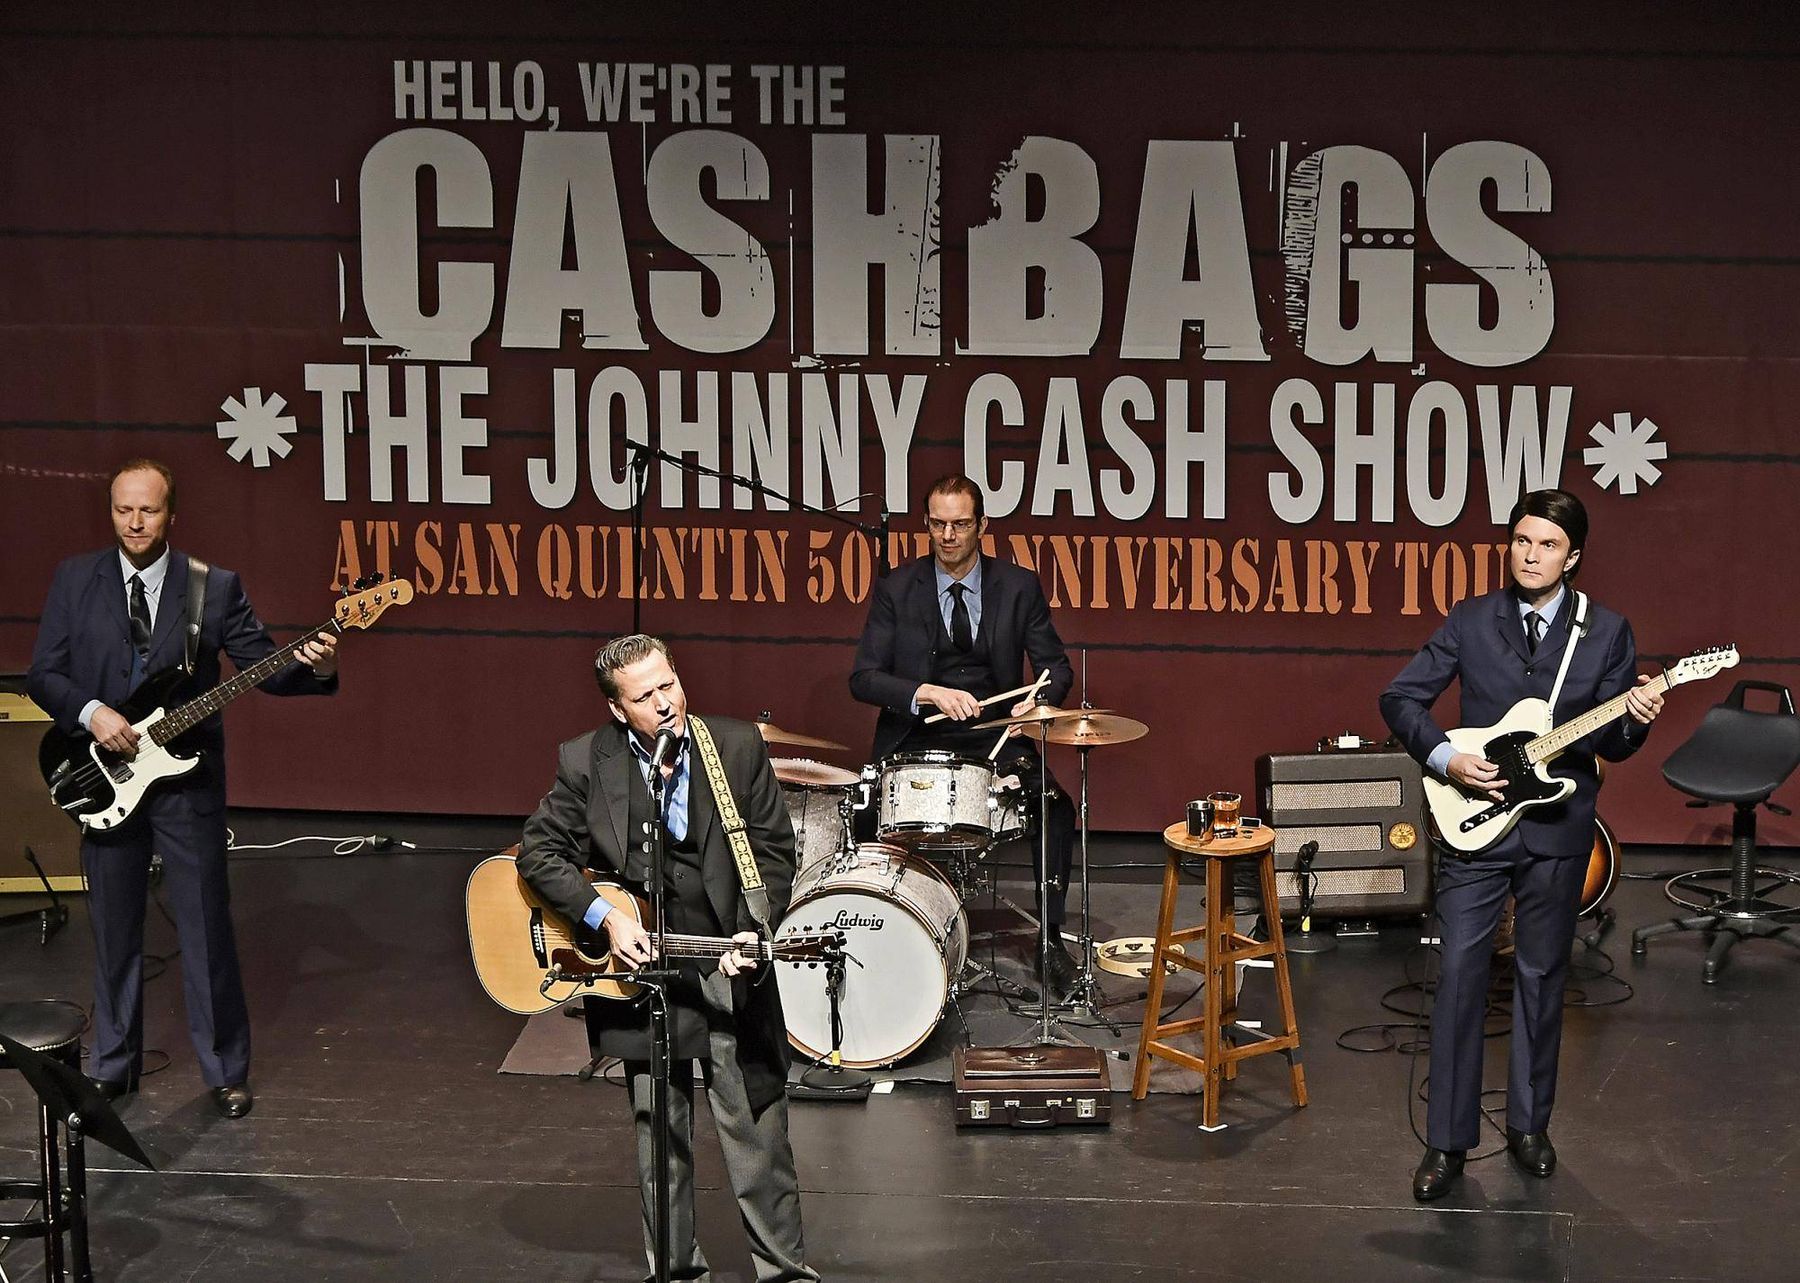 THE JOHNNY CASH SHOW - THE CASHBAGS